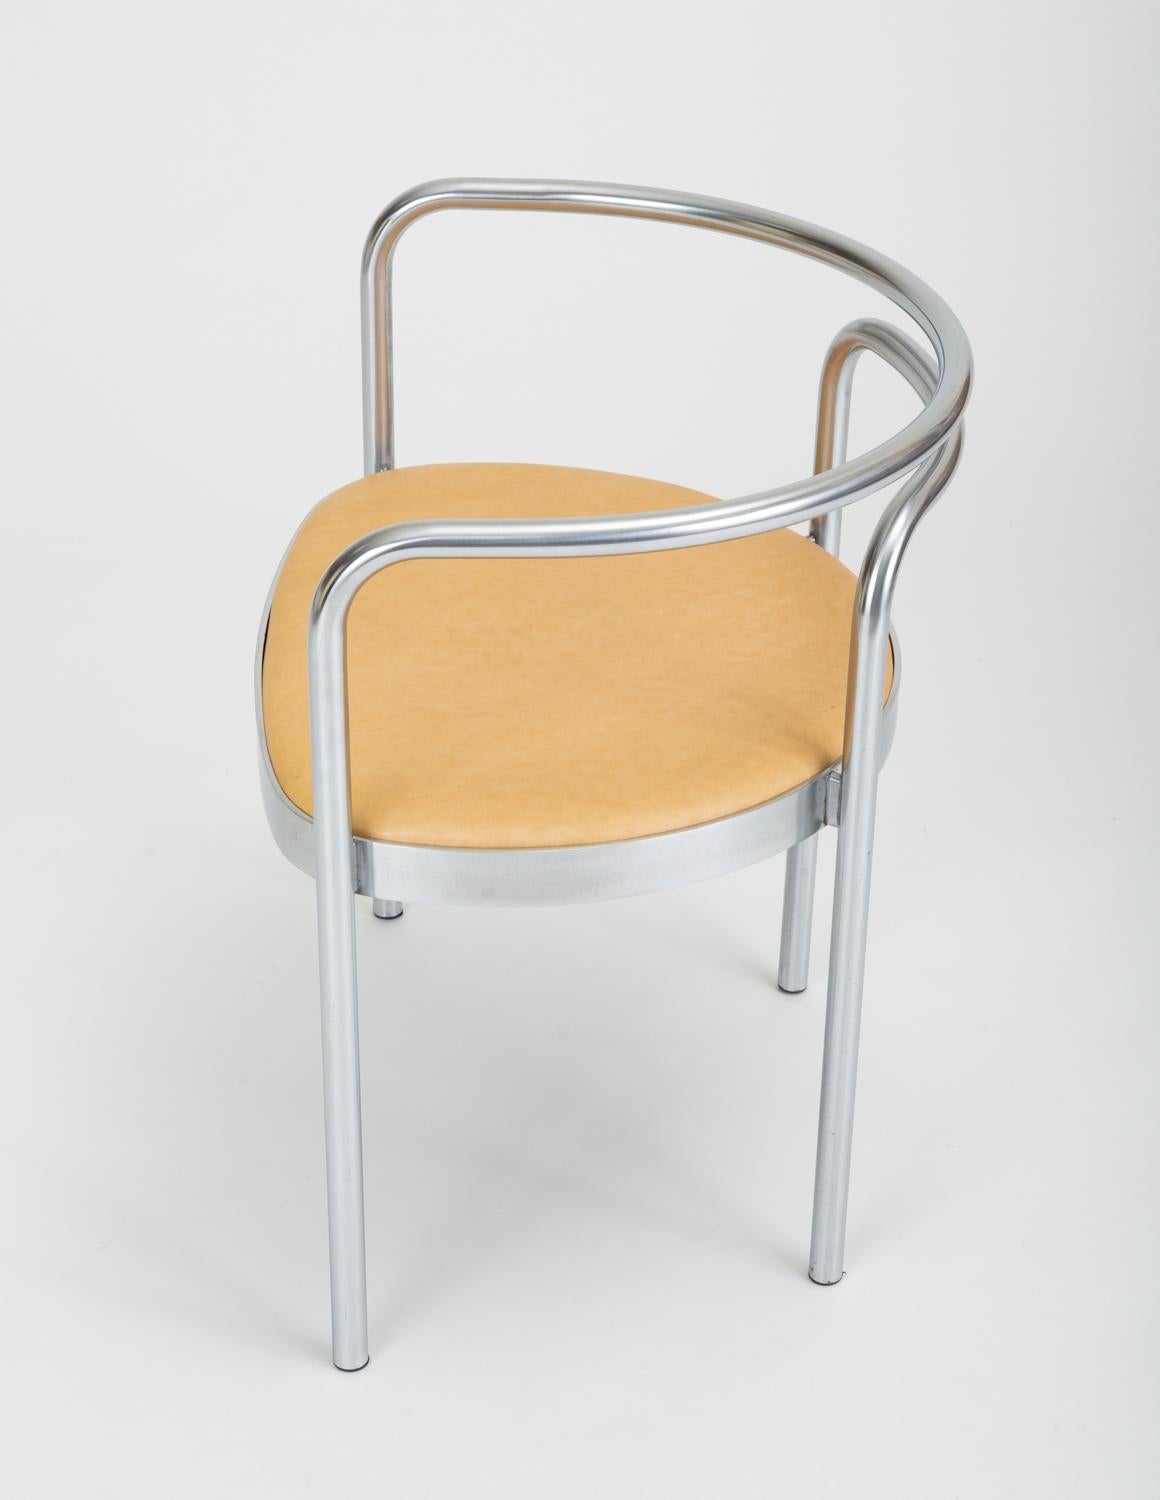 Single PK-12 Dining or Accent Chair by Poul Kjaerholm for E. Kold Christensen 1